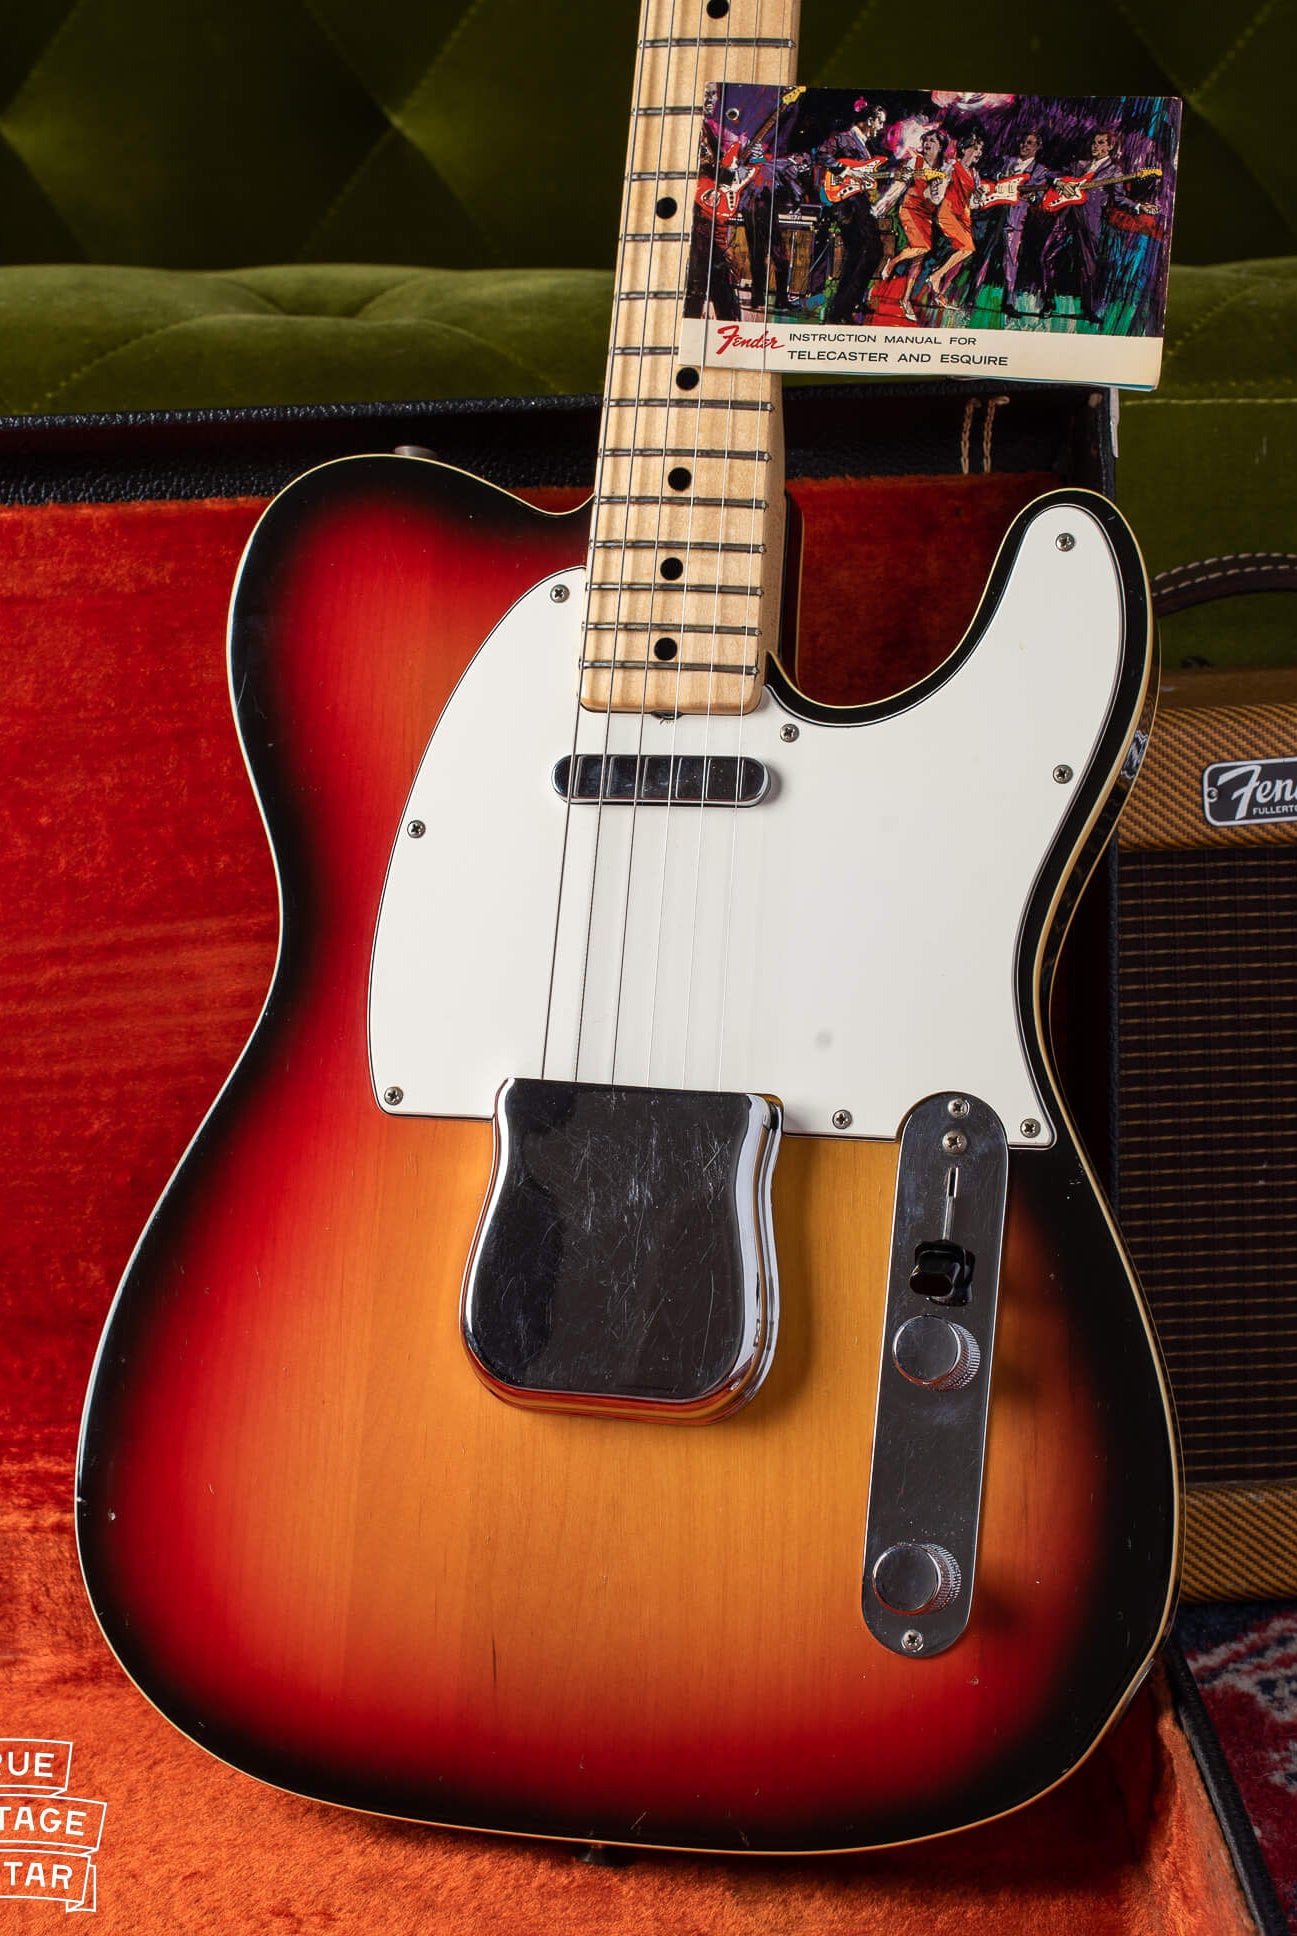 1971 Fender Telecaster Custom with Sunburst finish and double bound with white plastic edge binding